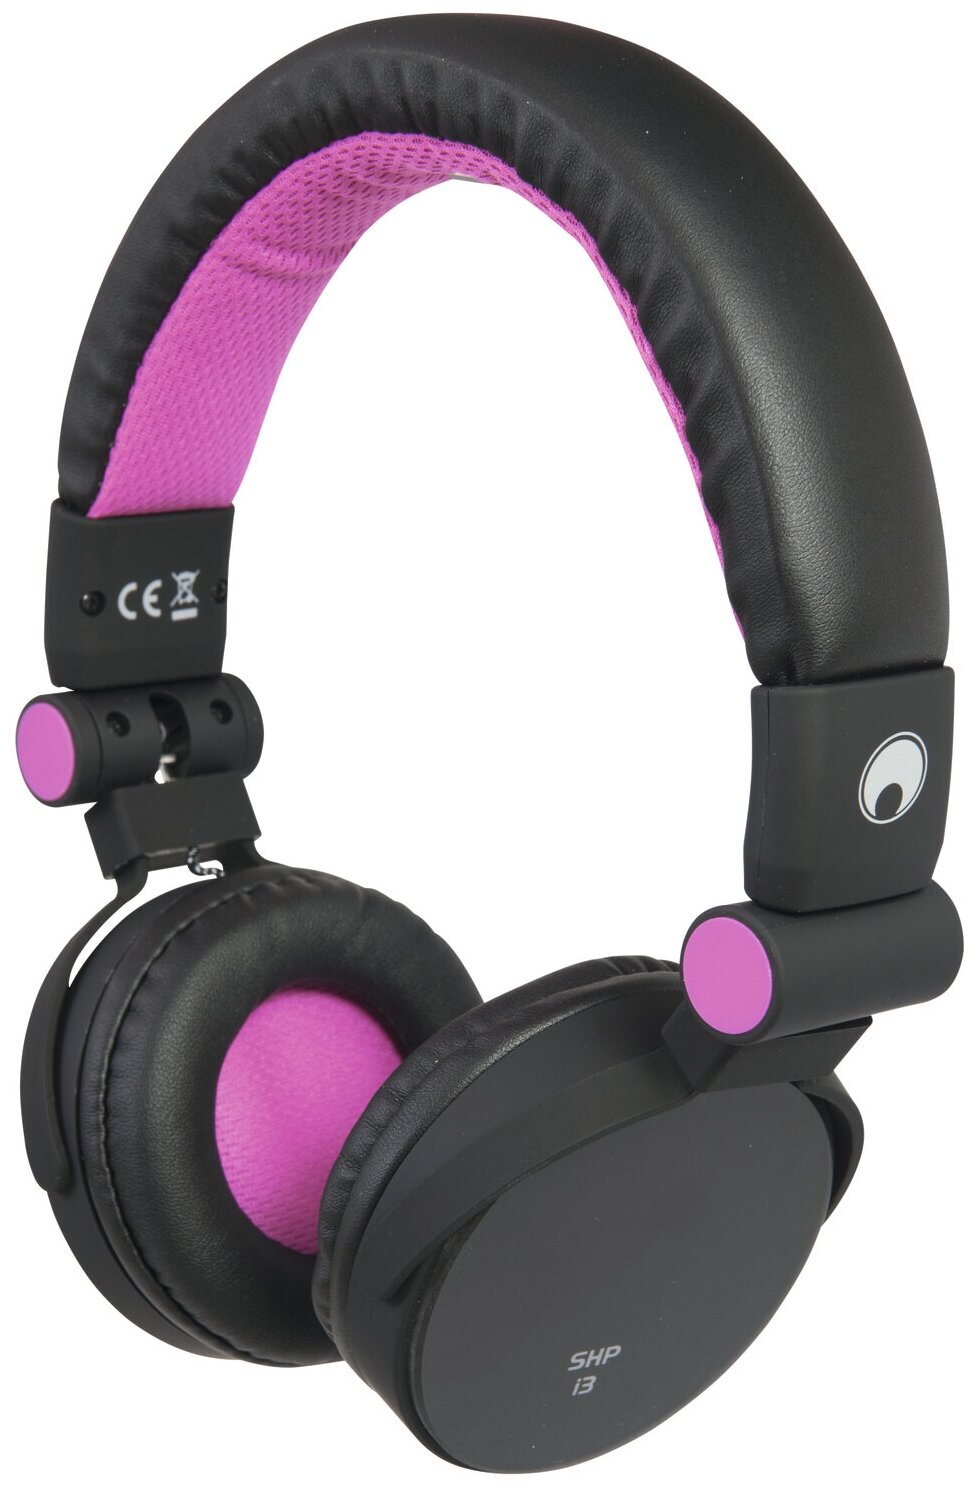 Omnitronic SHP-i3 Stereo Headphones Pink закрытые стереонаушники, цвет розовый